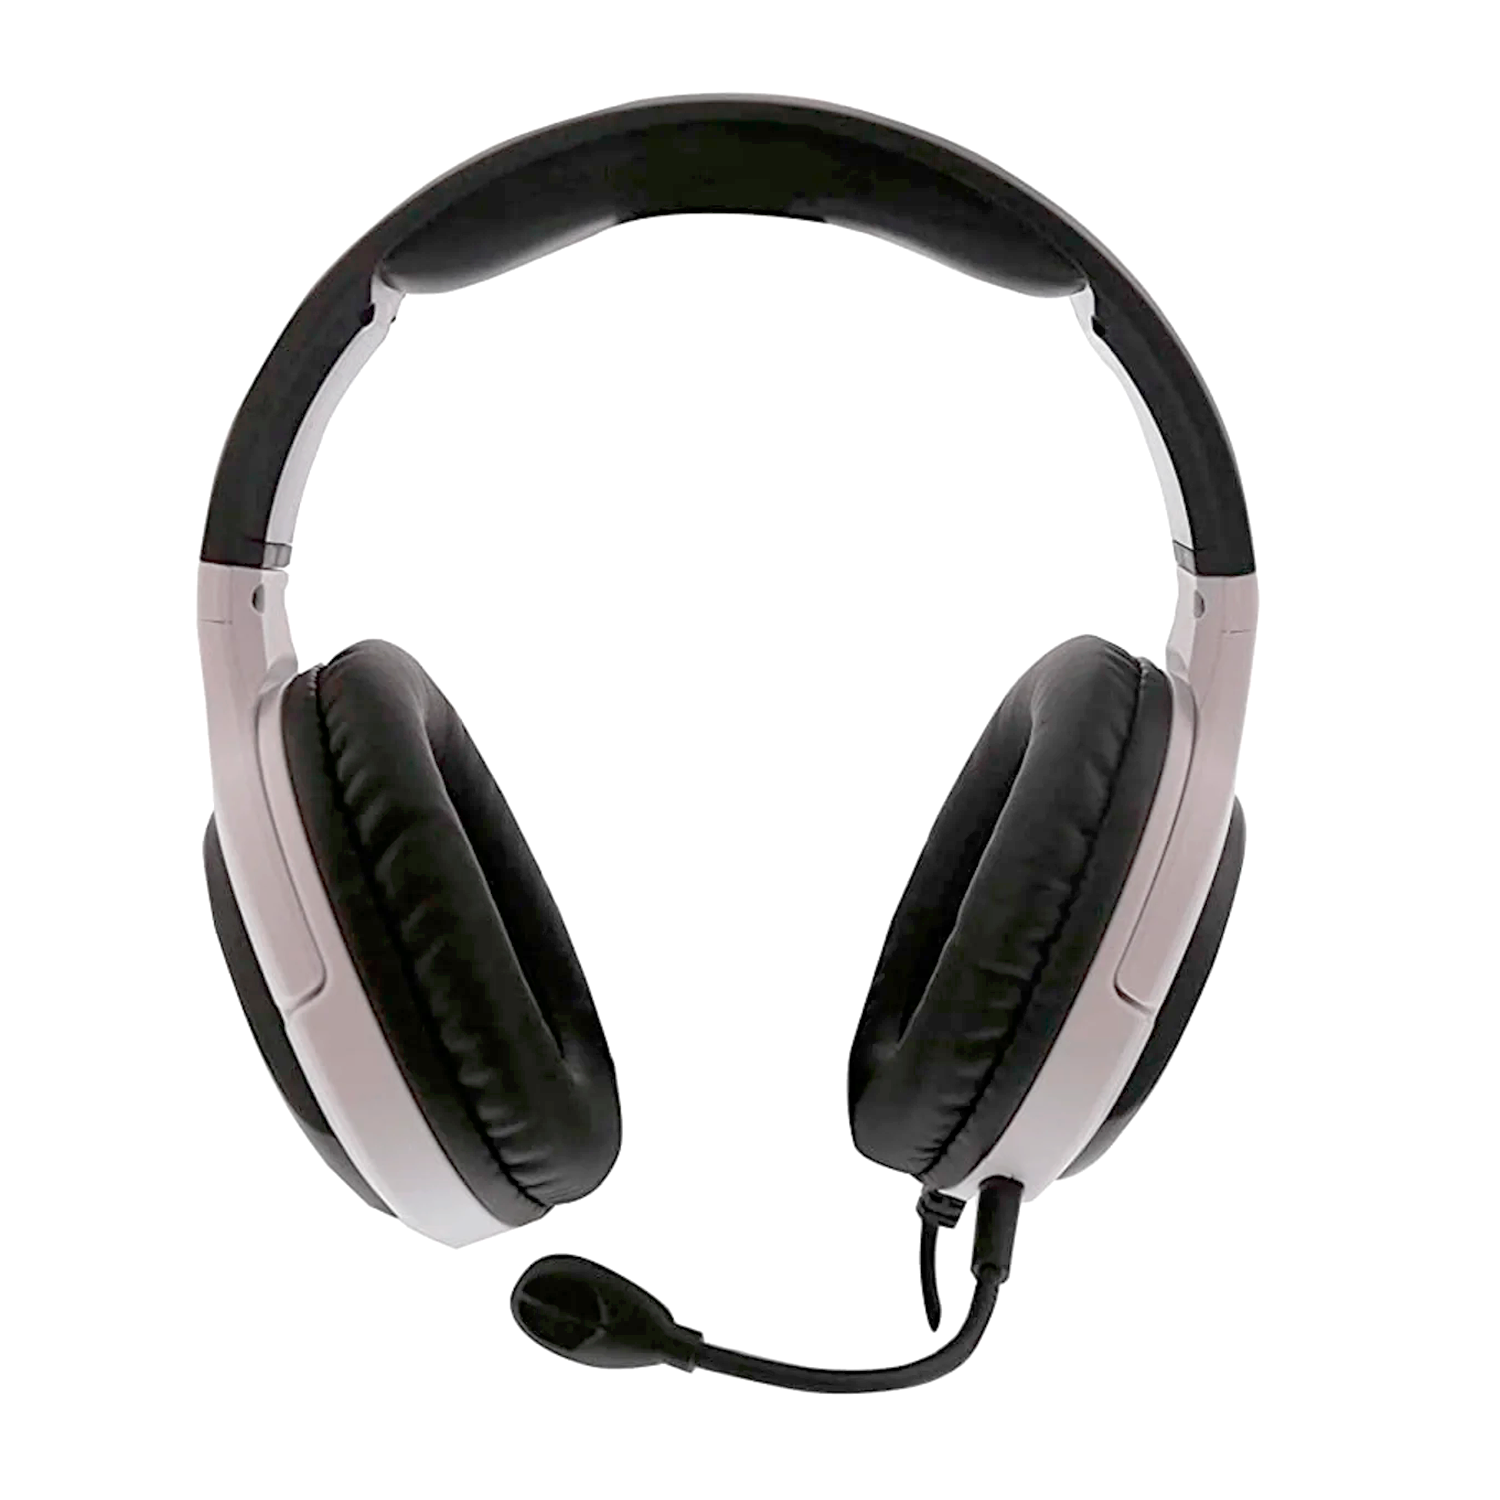 Headset Gamer Nyko NP5-5000 para PS5 - Preto e Branco (833062)